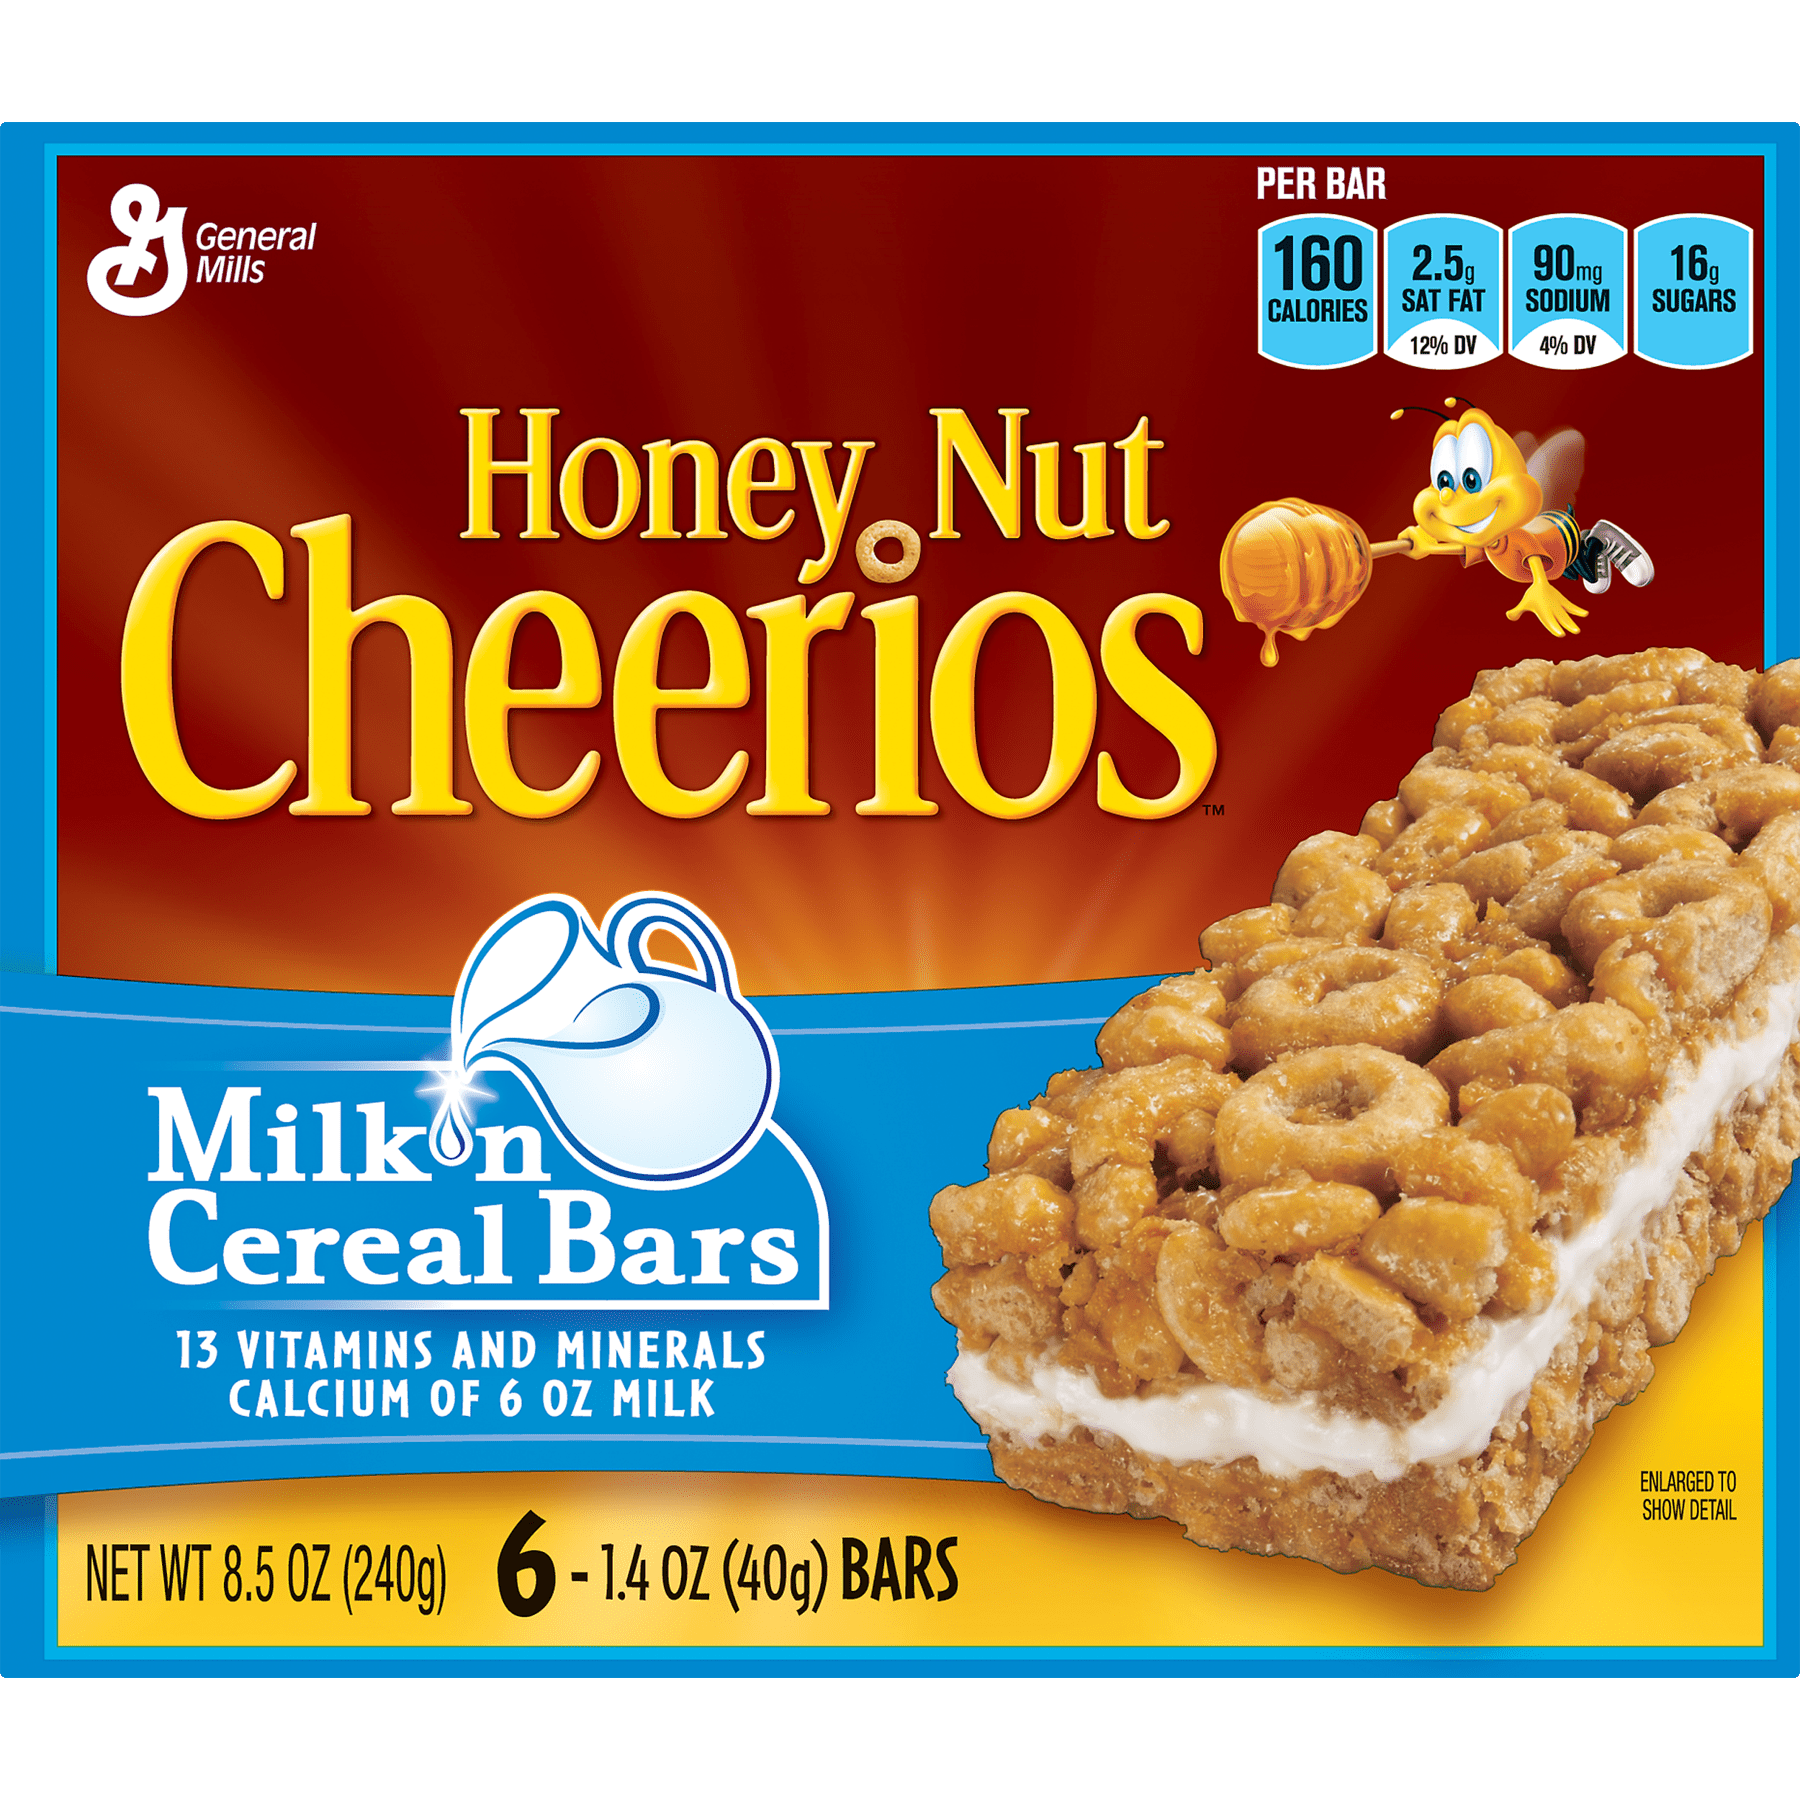 Honey Nut Cheerios Cereal